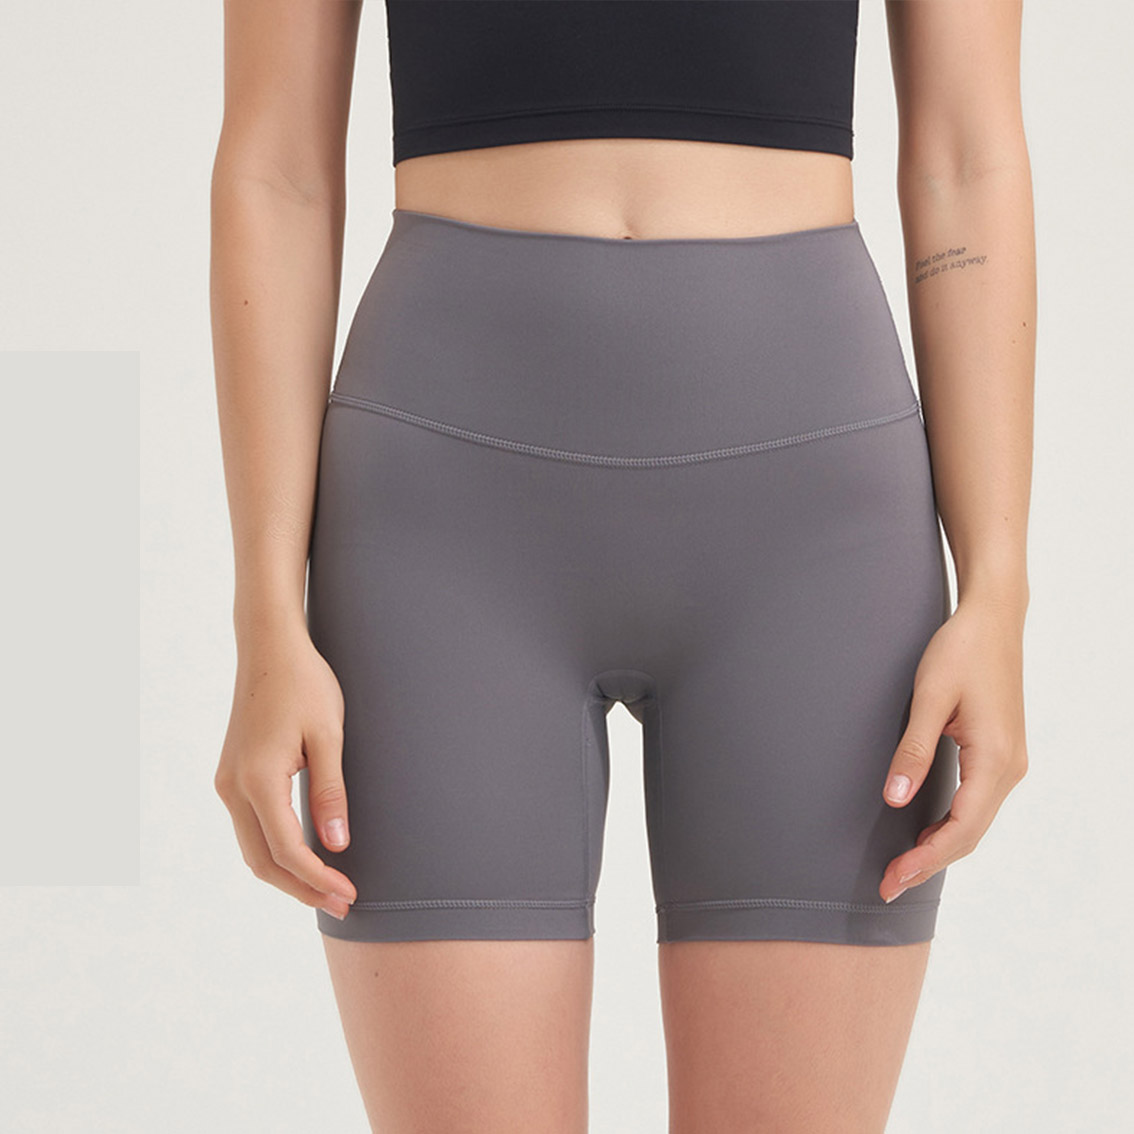 seamless shorts manufacturers